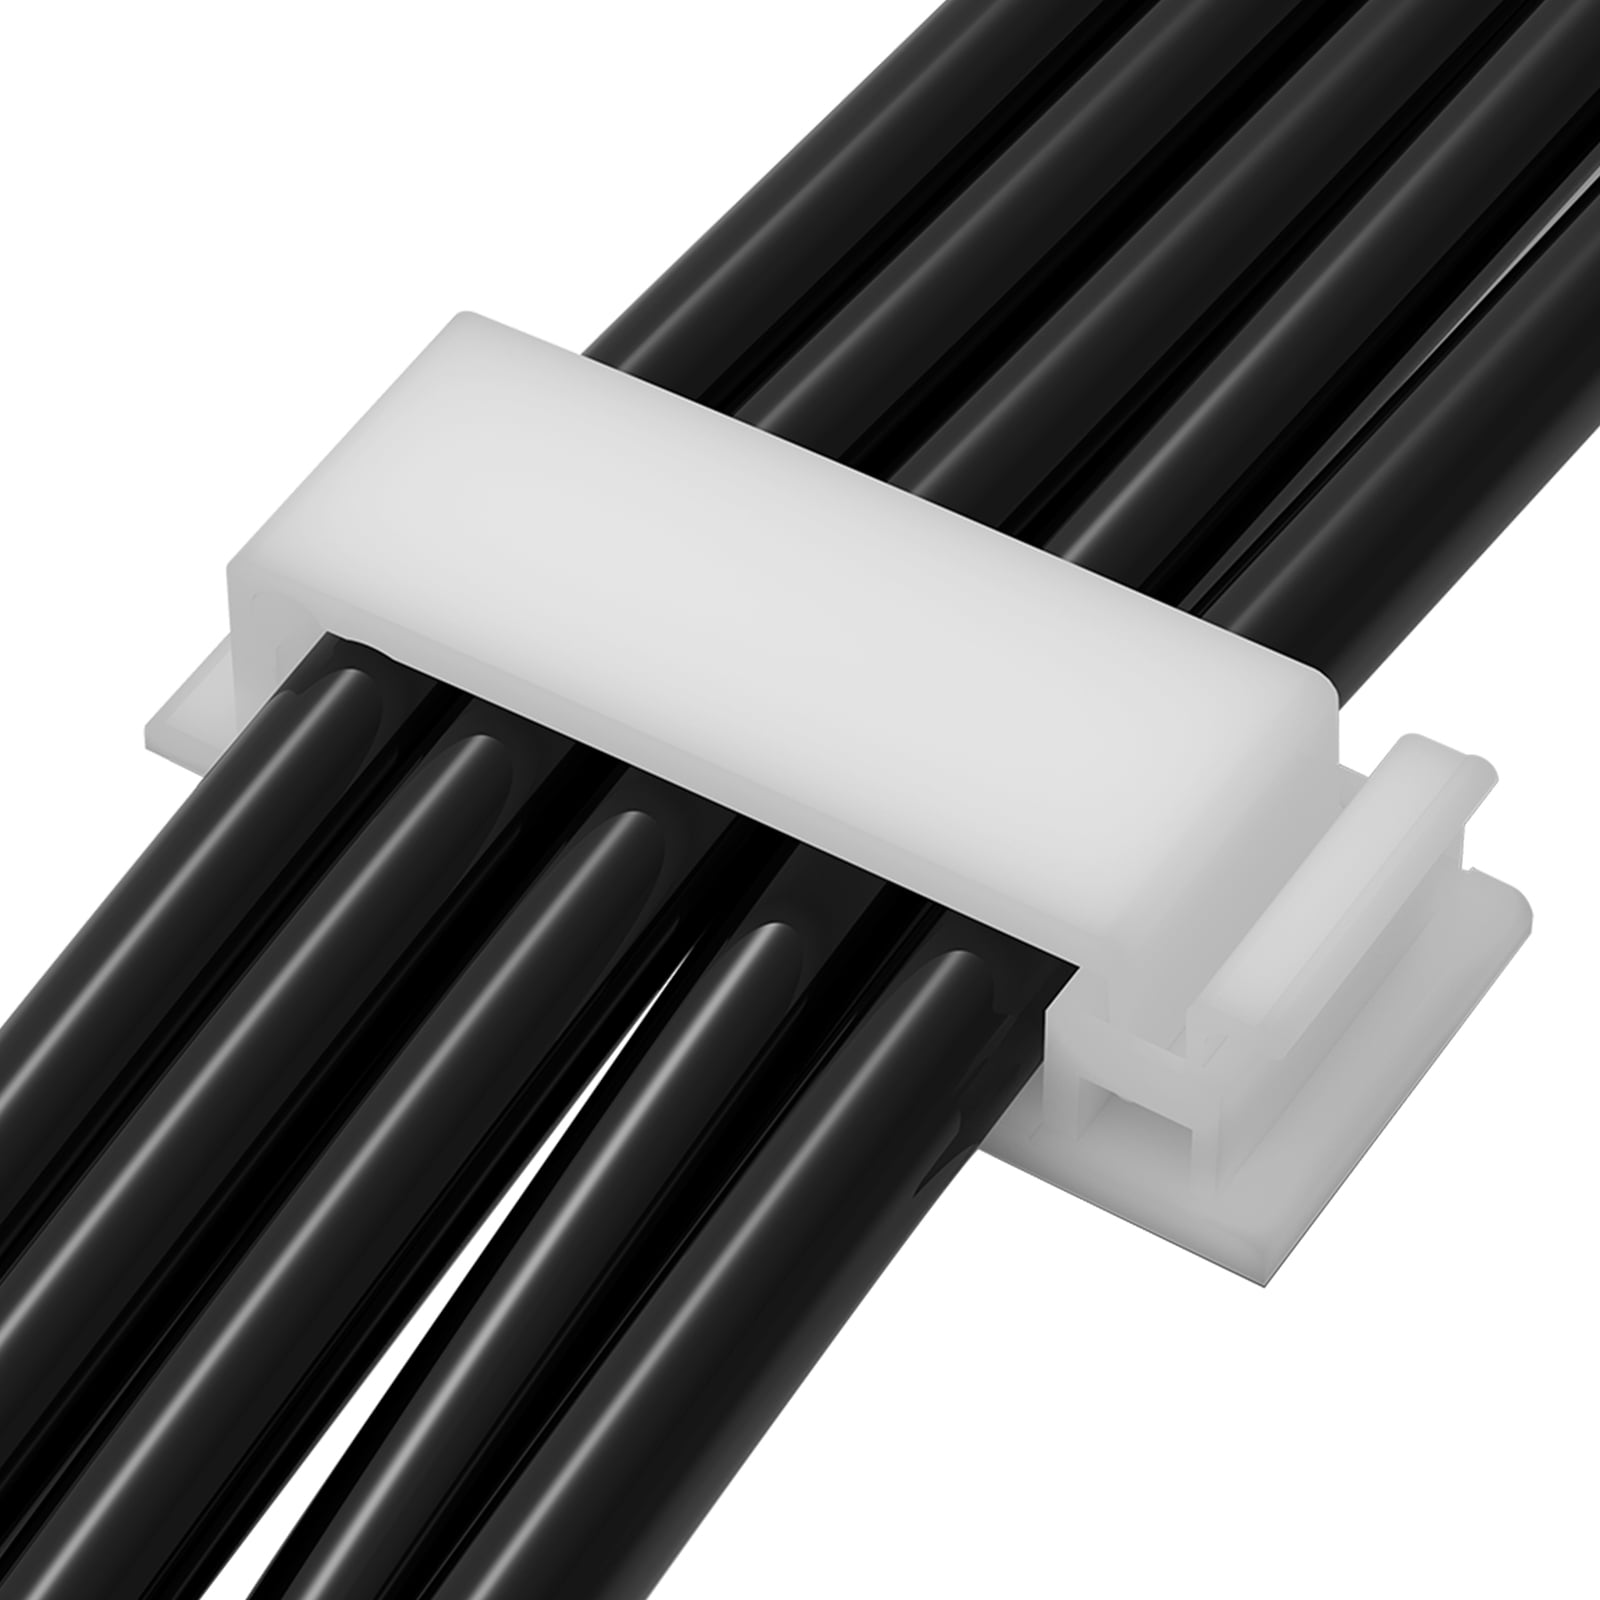 Stalwart NNGSR77 Complete Cable Concealer Management Kit in White